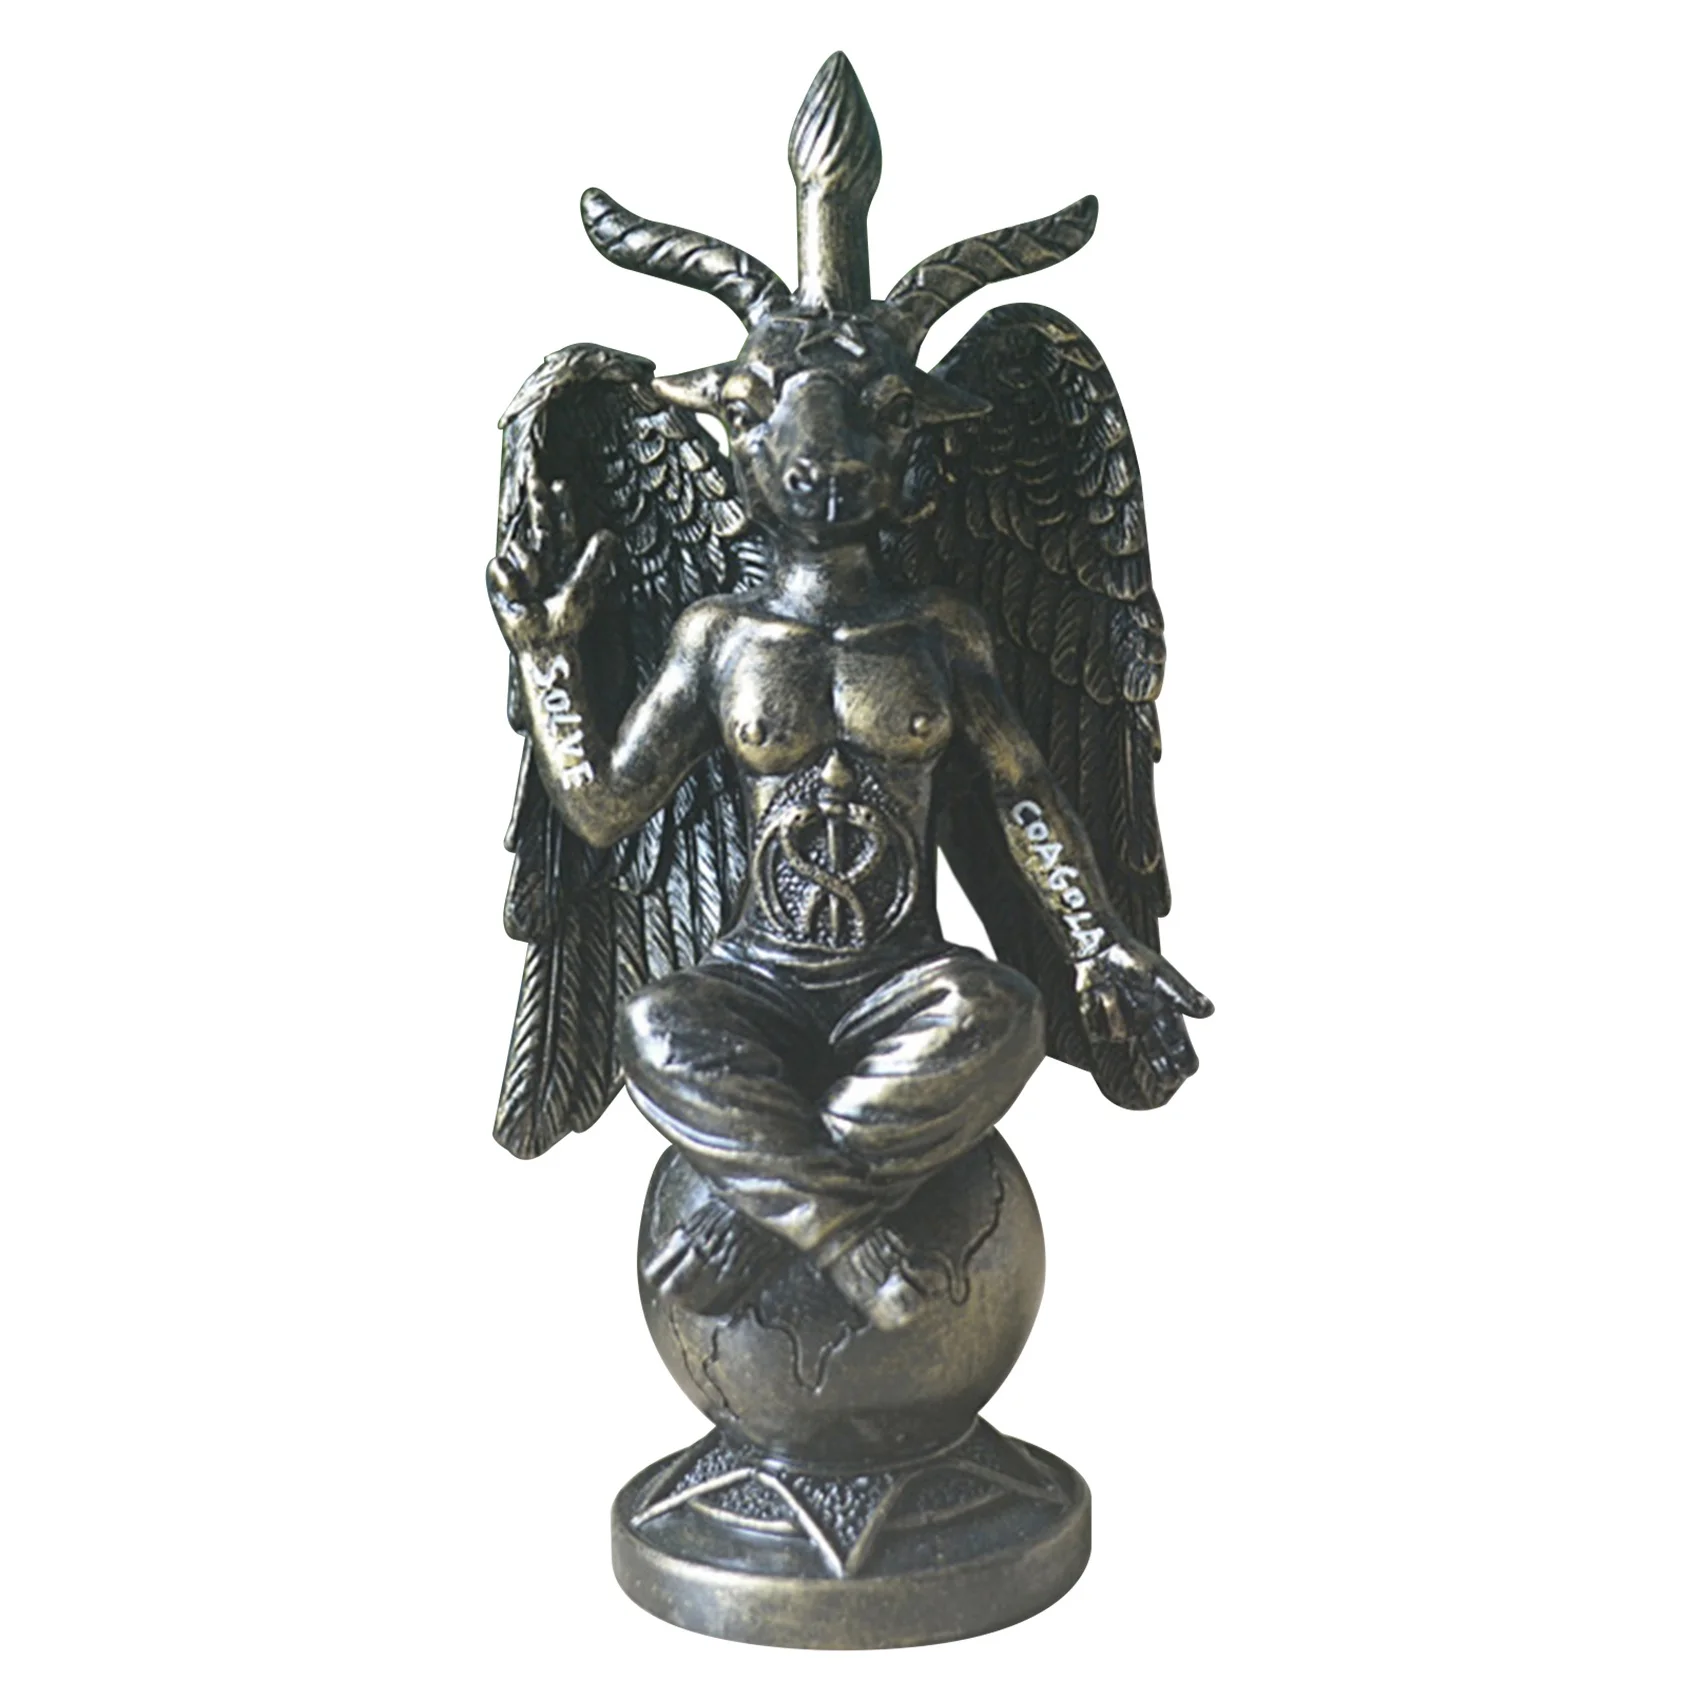 

Satanic Idol Baphomet Sculpture Zen Meditation Magic Wing Goat Statue Resin Crafts Religious Ornaments Home Decoration A